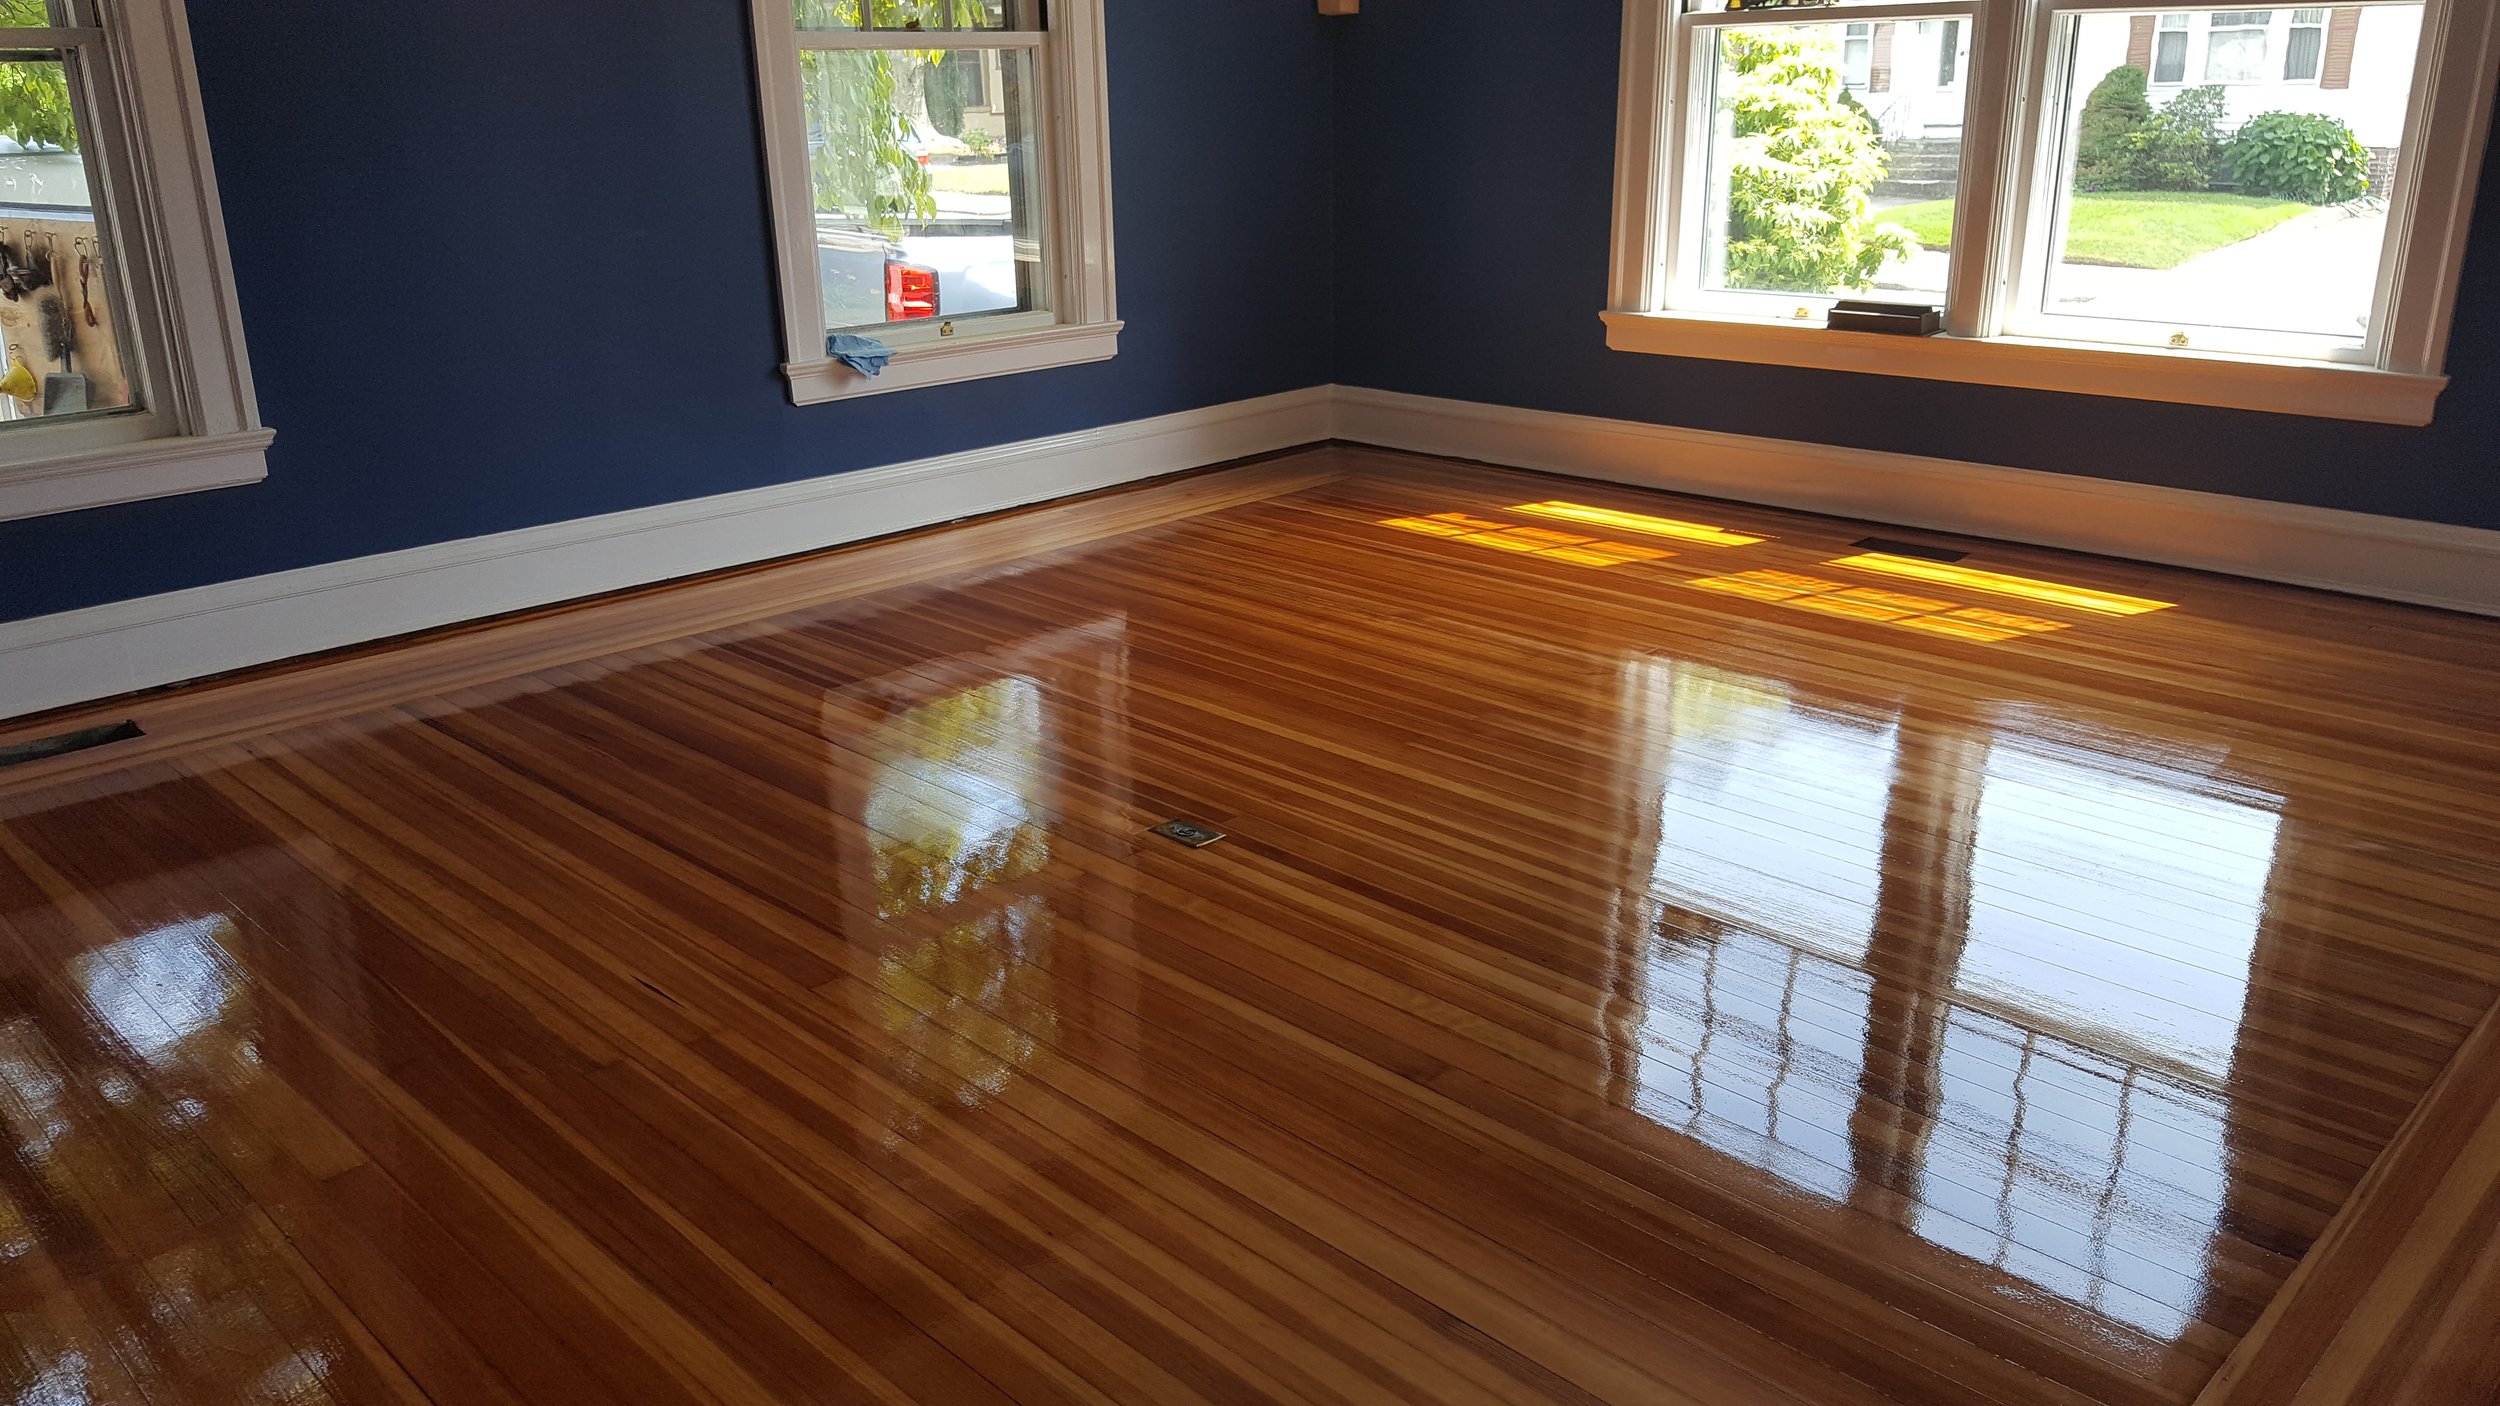 Renaissance Floor Refinishing, Semi Gloss Finish On Hardwood Floors